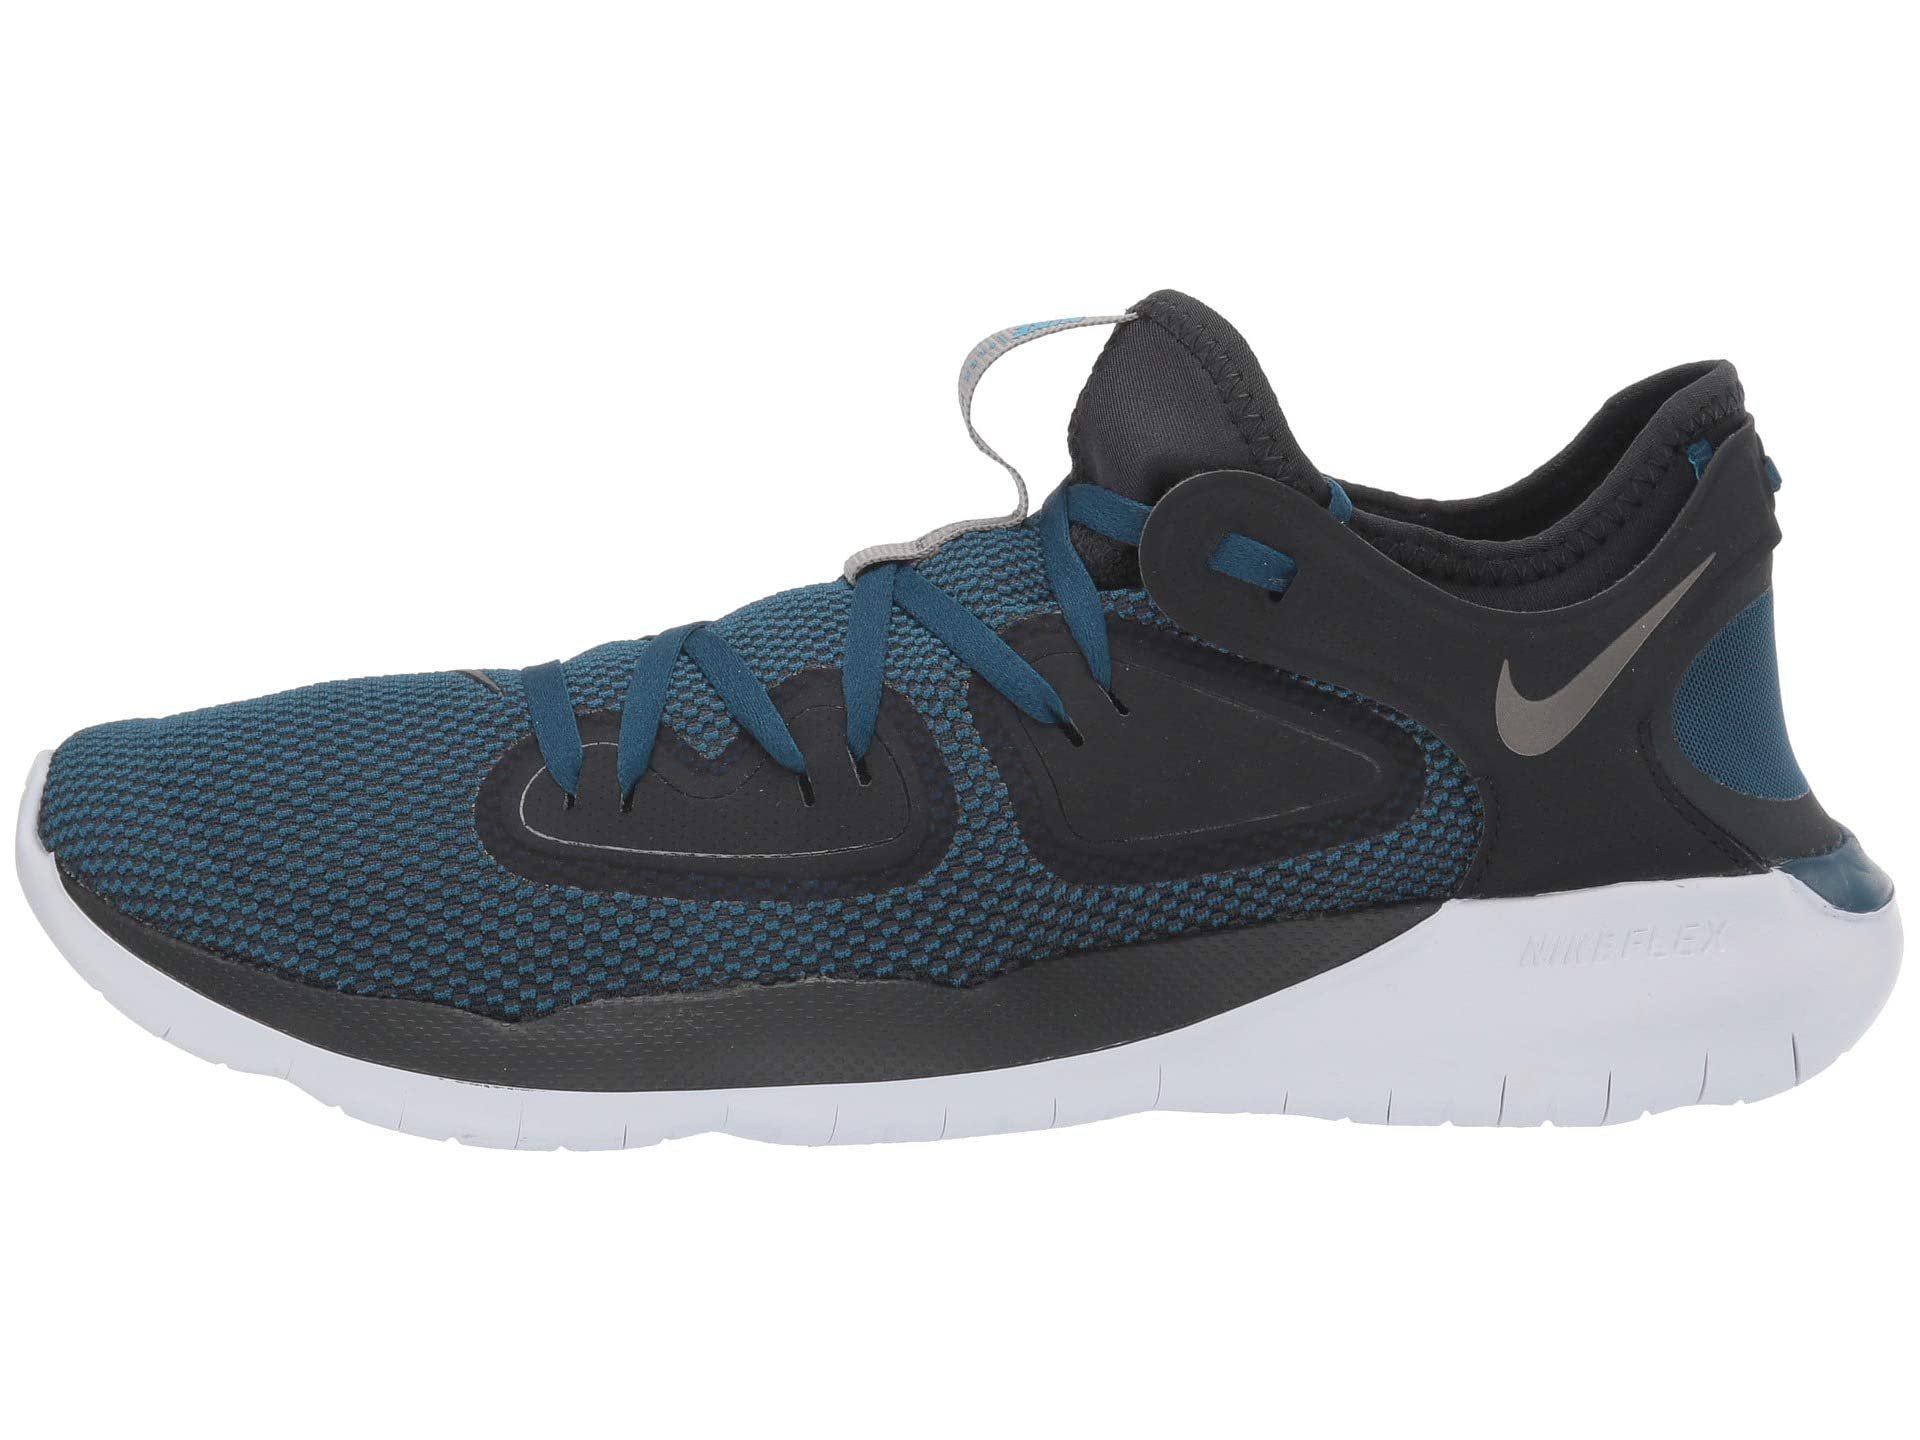 Nike Men's Flex 2019 RN Running Shoes - image 3 of 7